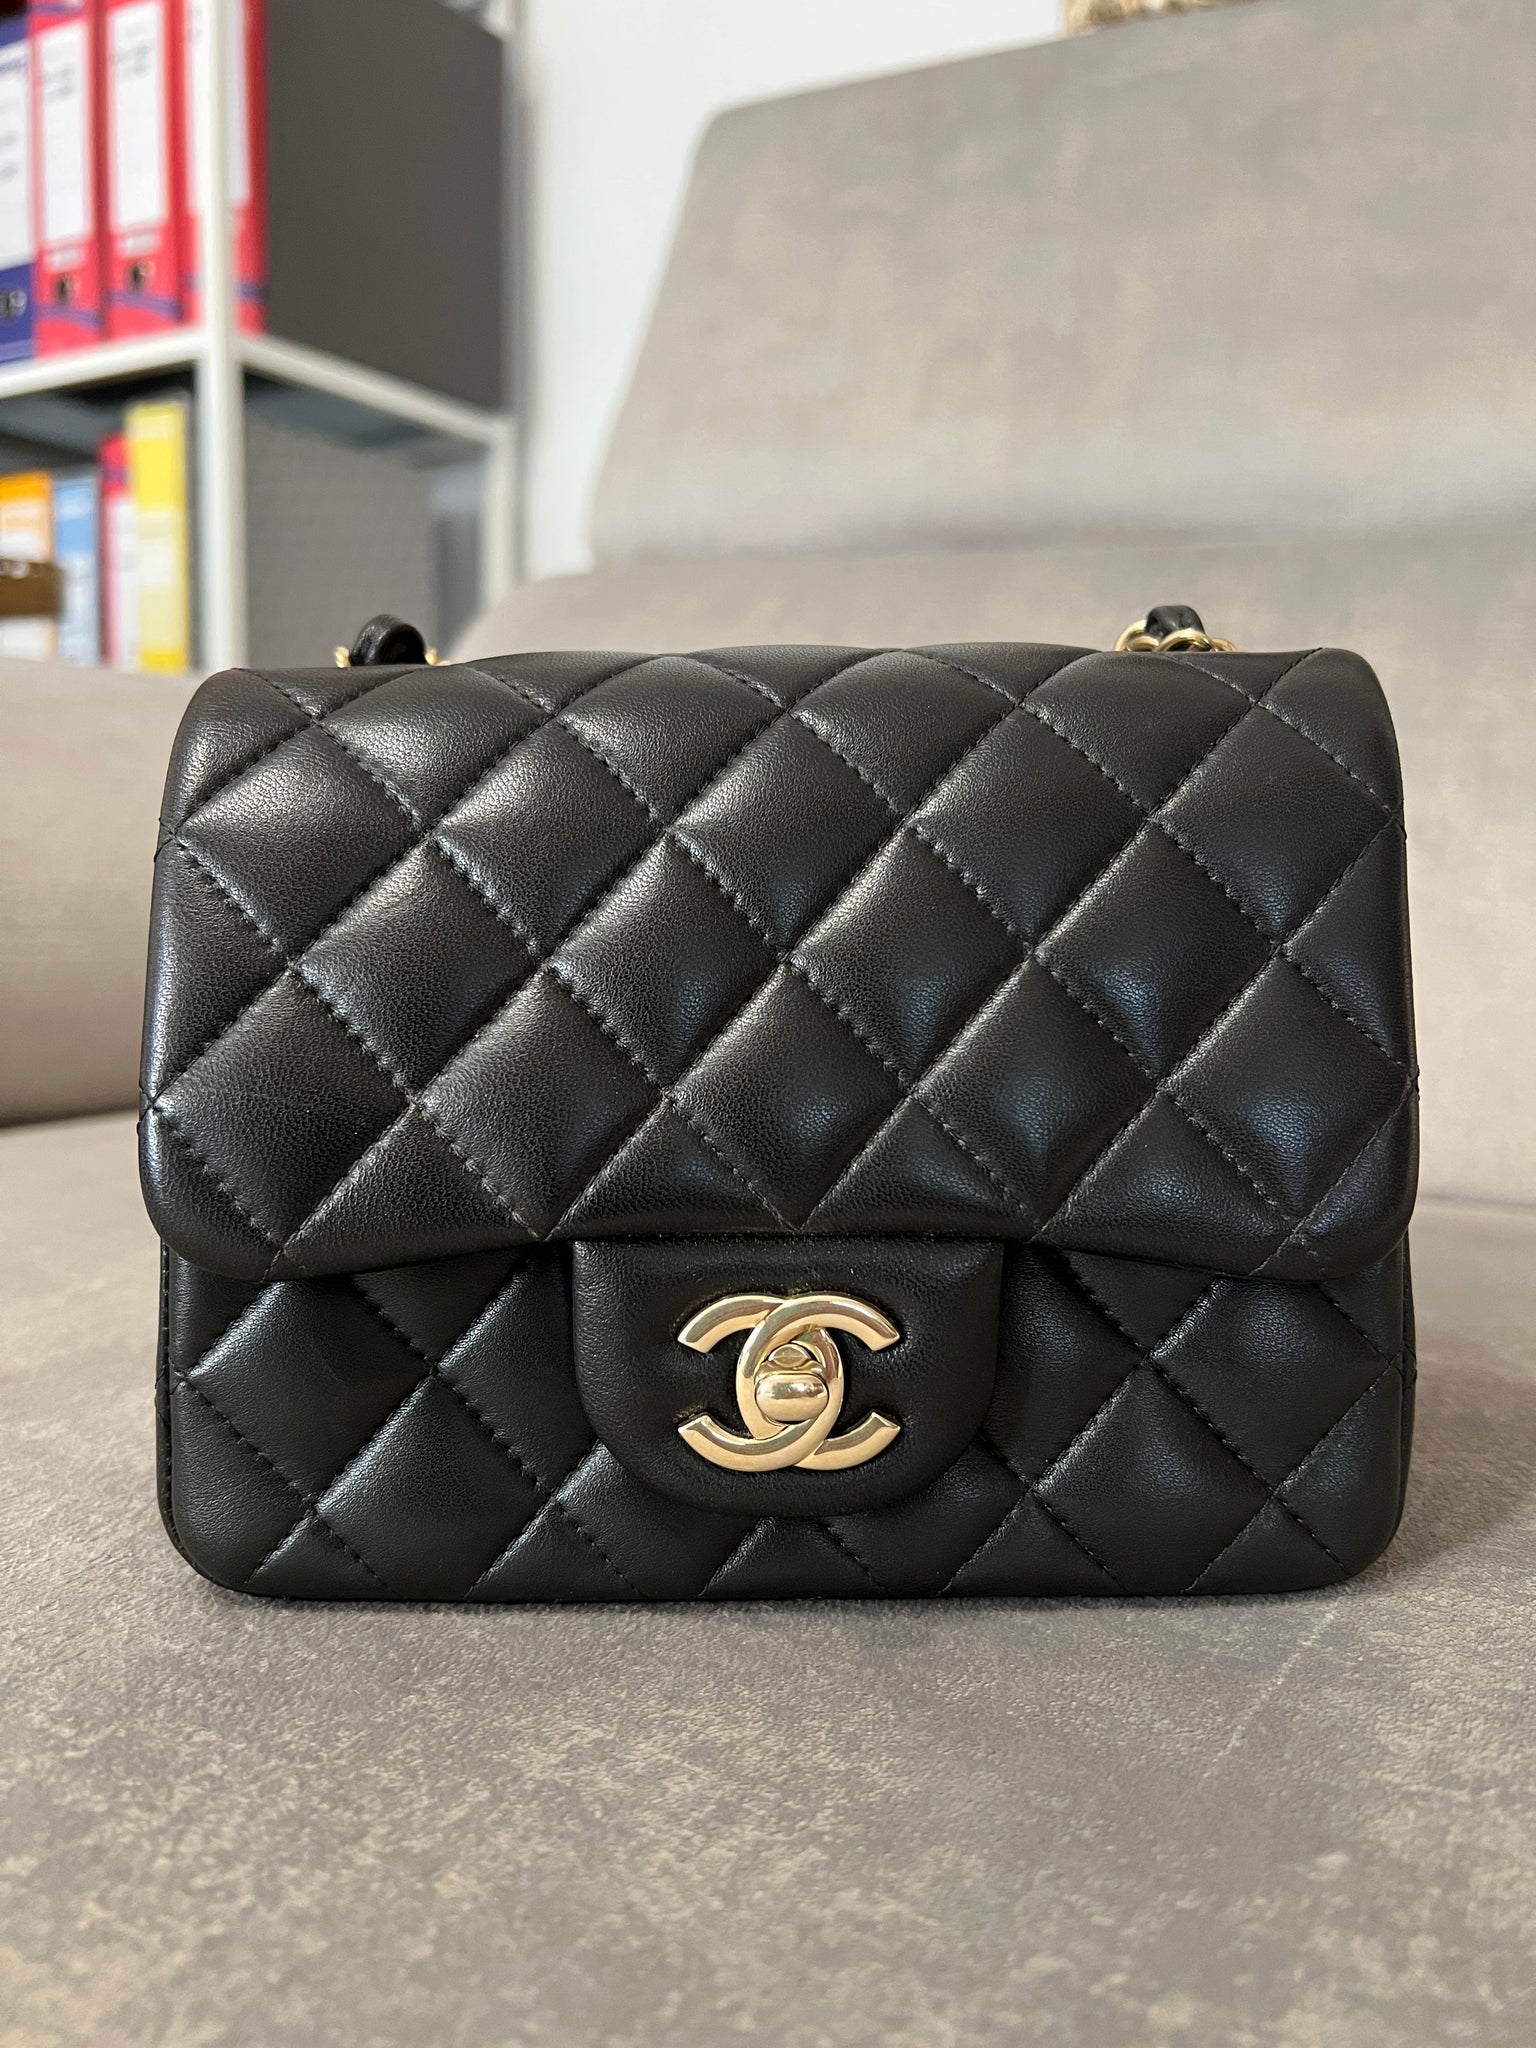 CHANEL, Bags, Black Chanel Mini Flap